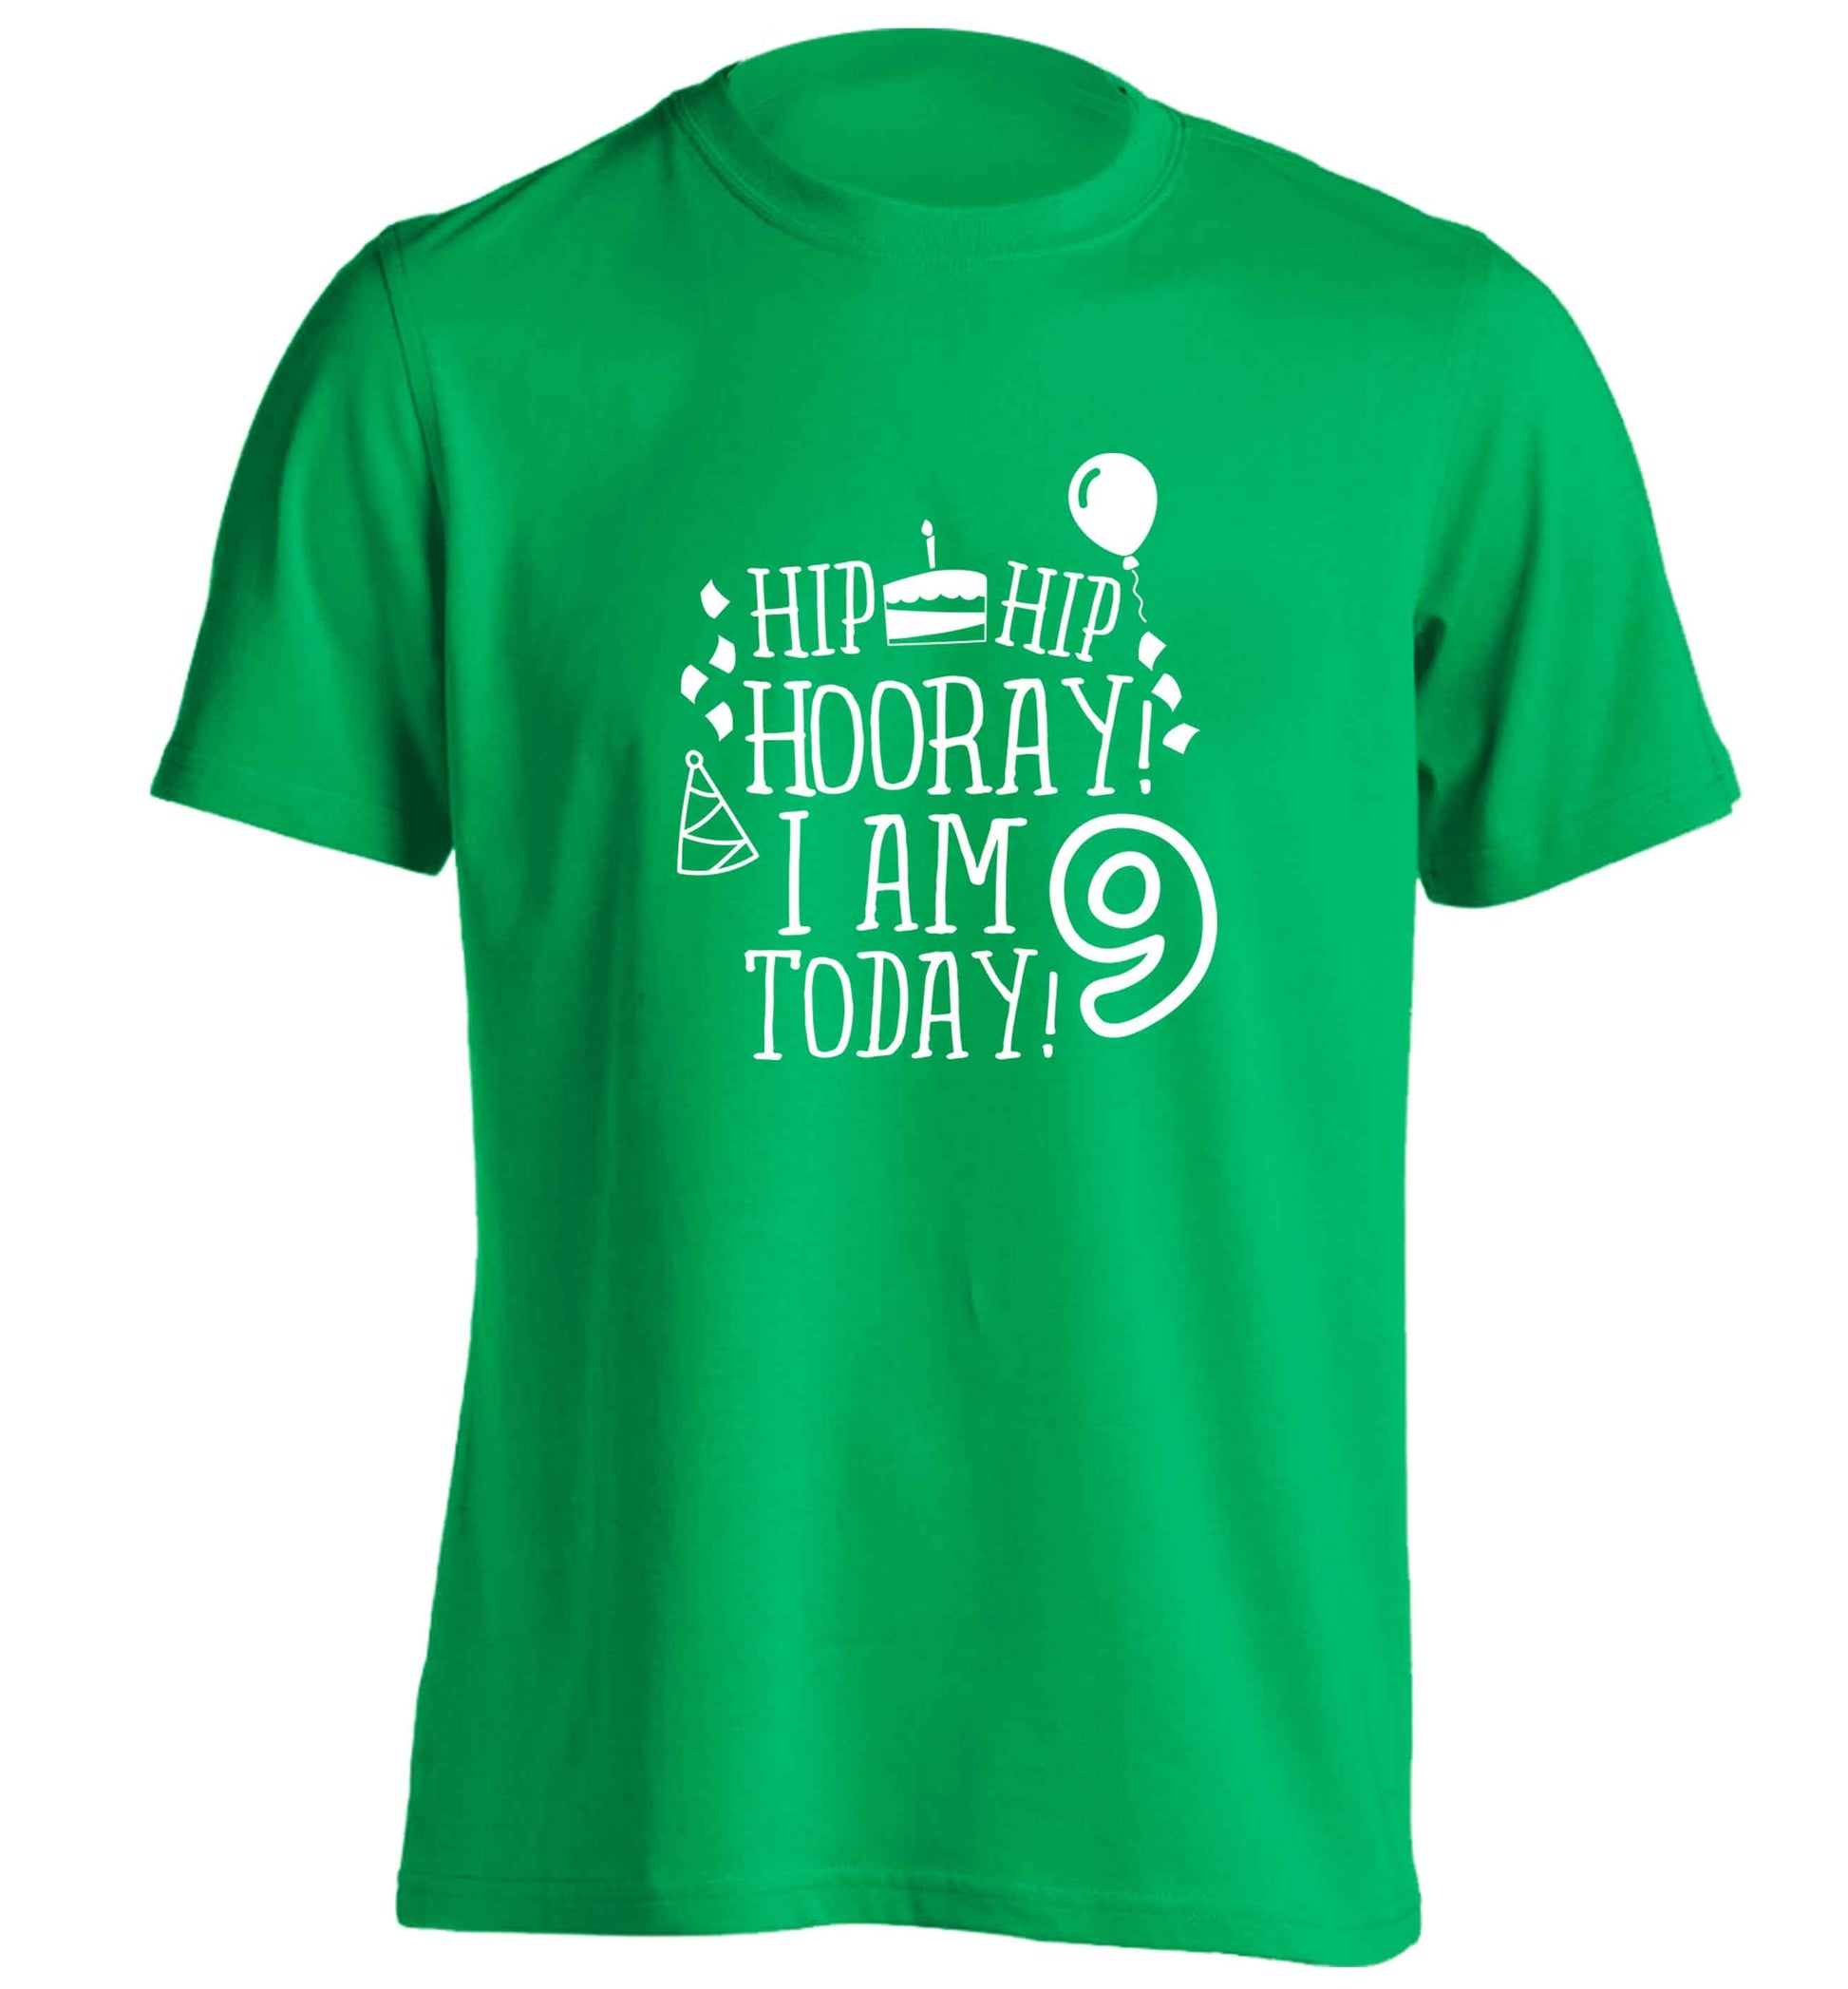 Hip hip hooray I am 9 today! adults unisex green Tshirt 2XL